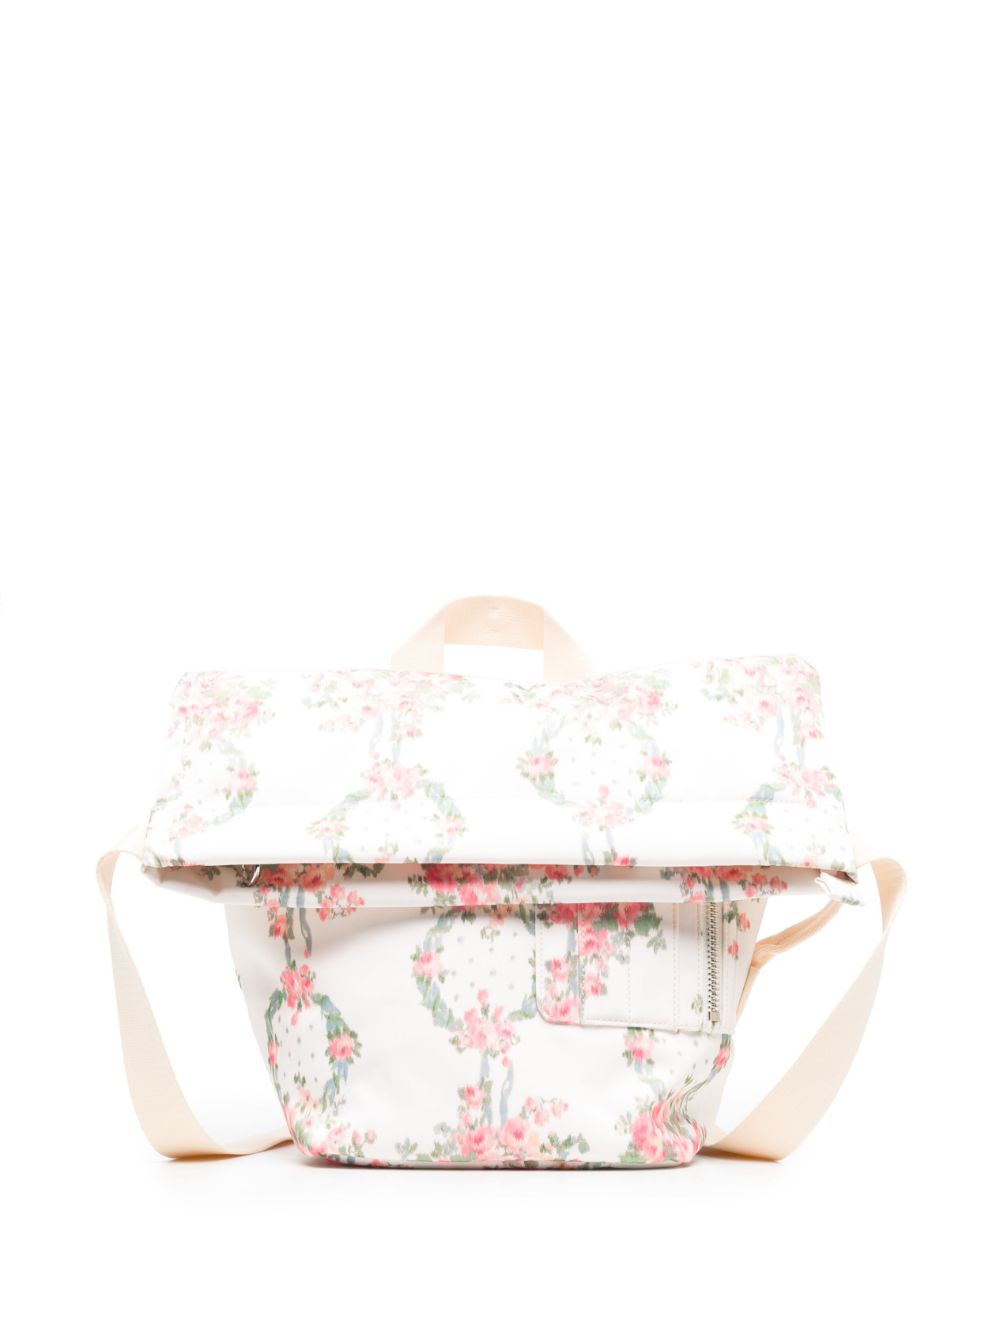 SIMONE ROCHA Bags for Women | ModeSens